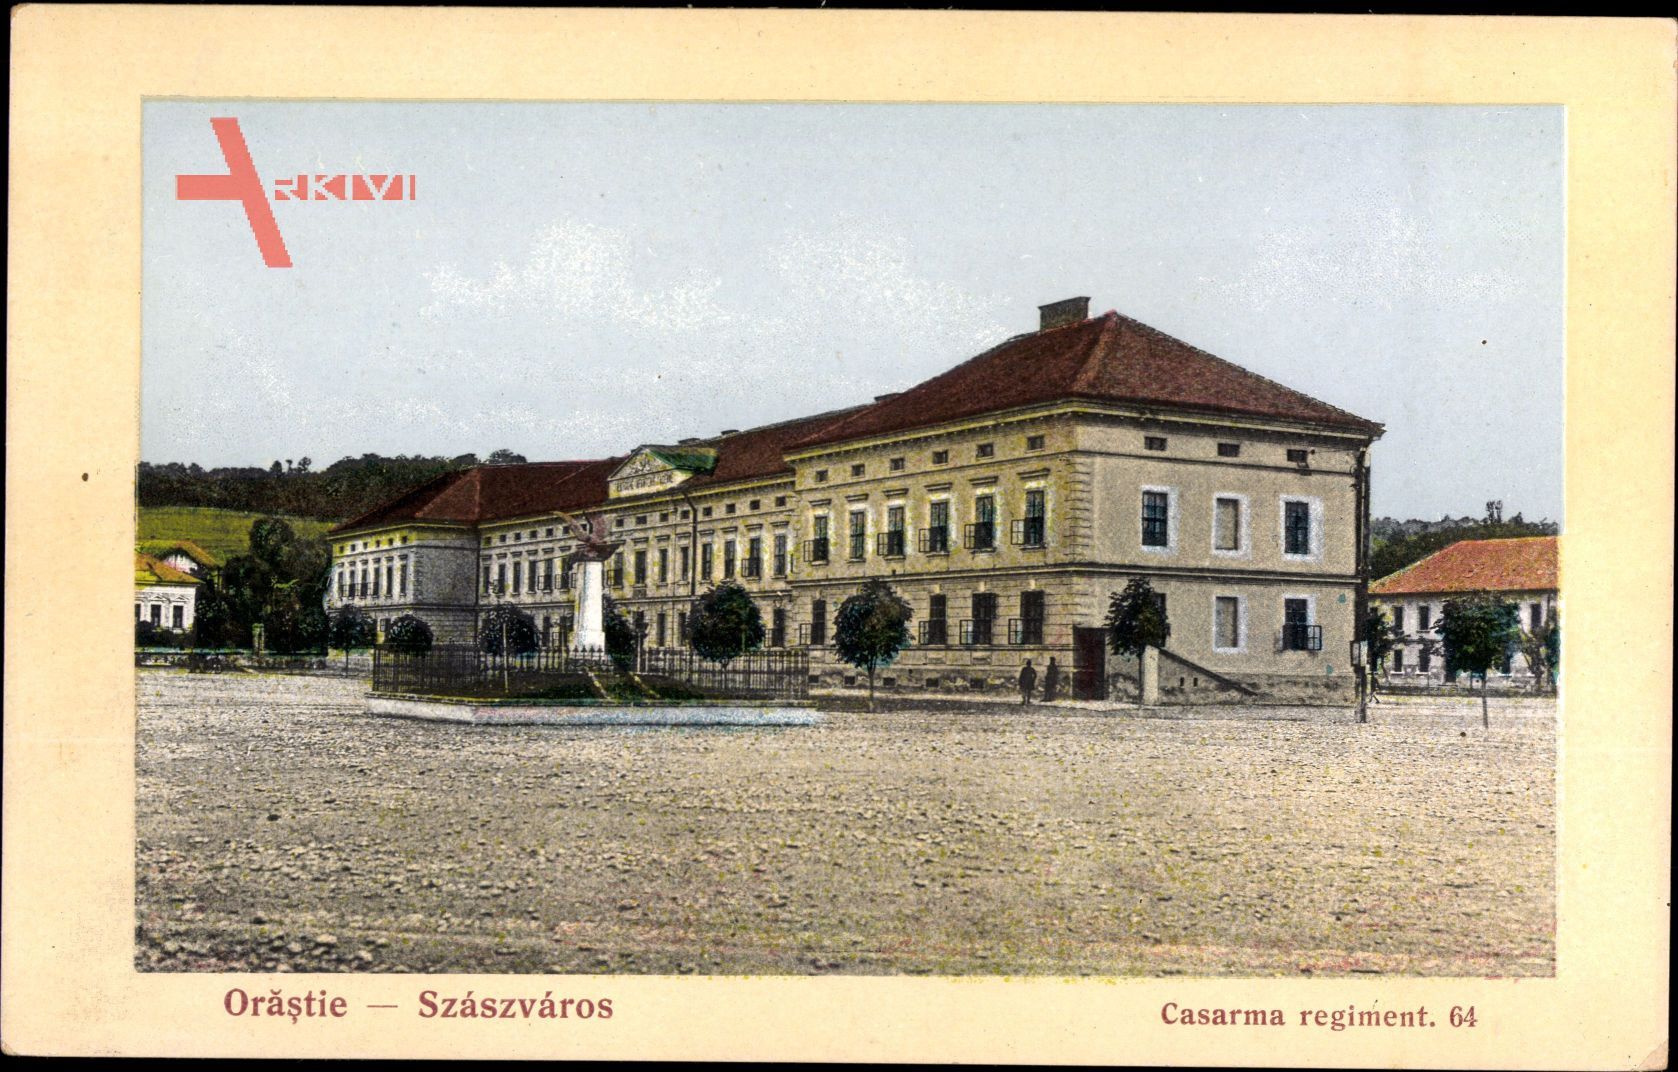 Orăștie Szászváros Rumänien, Casarma regiment 64